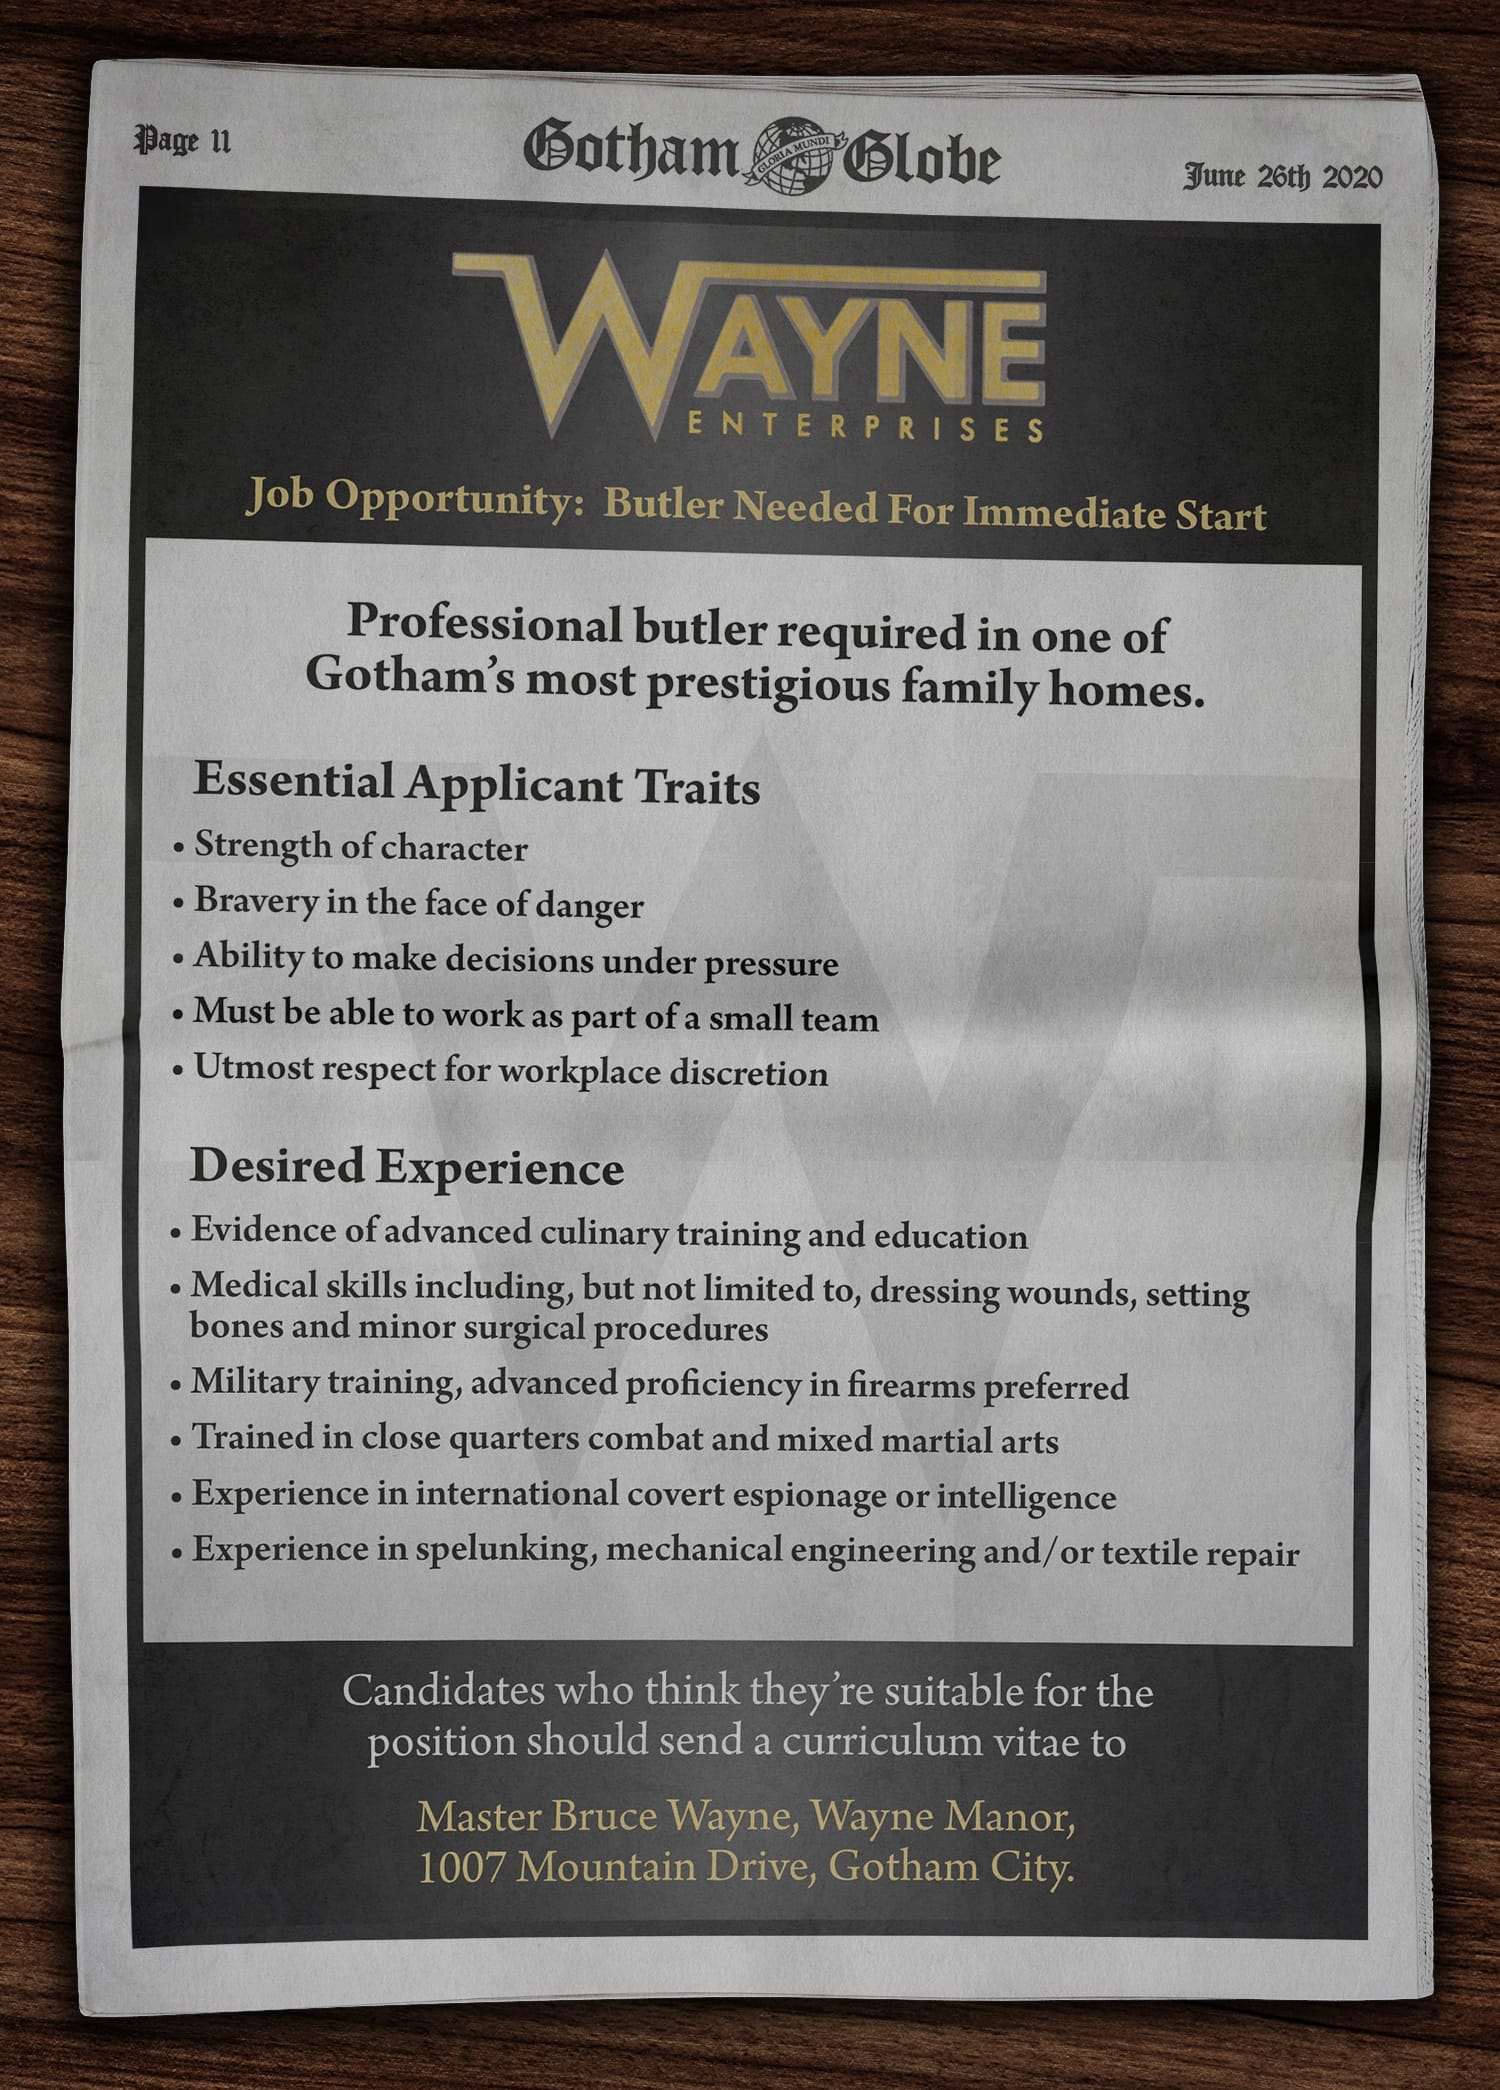 Fictional Batman recruitment poster - Wayne Enterprises advertisement for a professional butler in the Gotham Globe